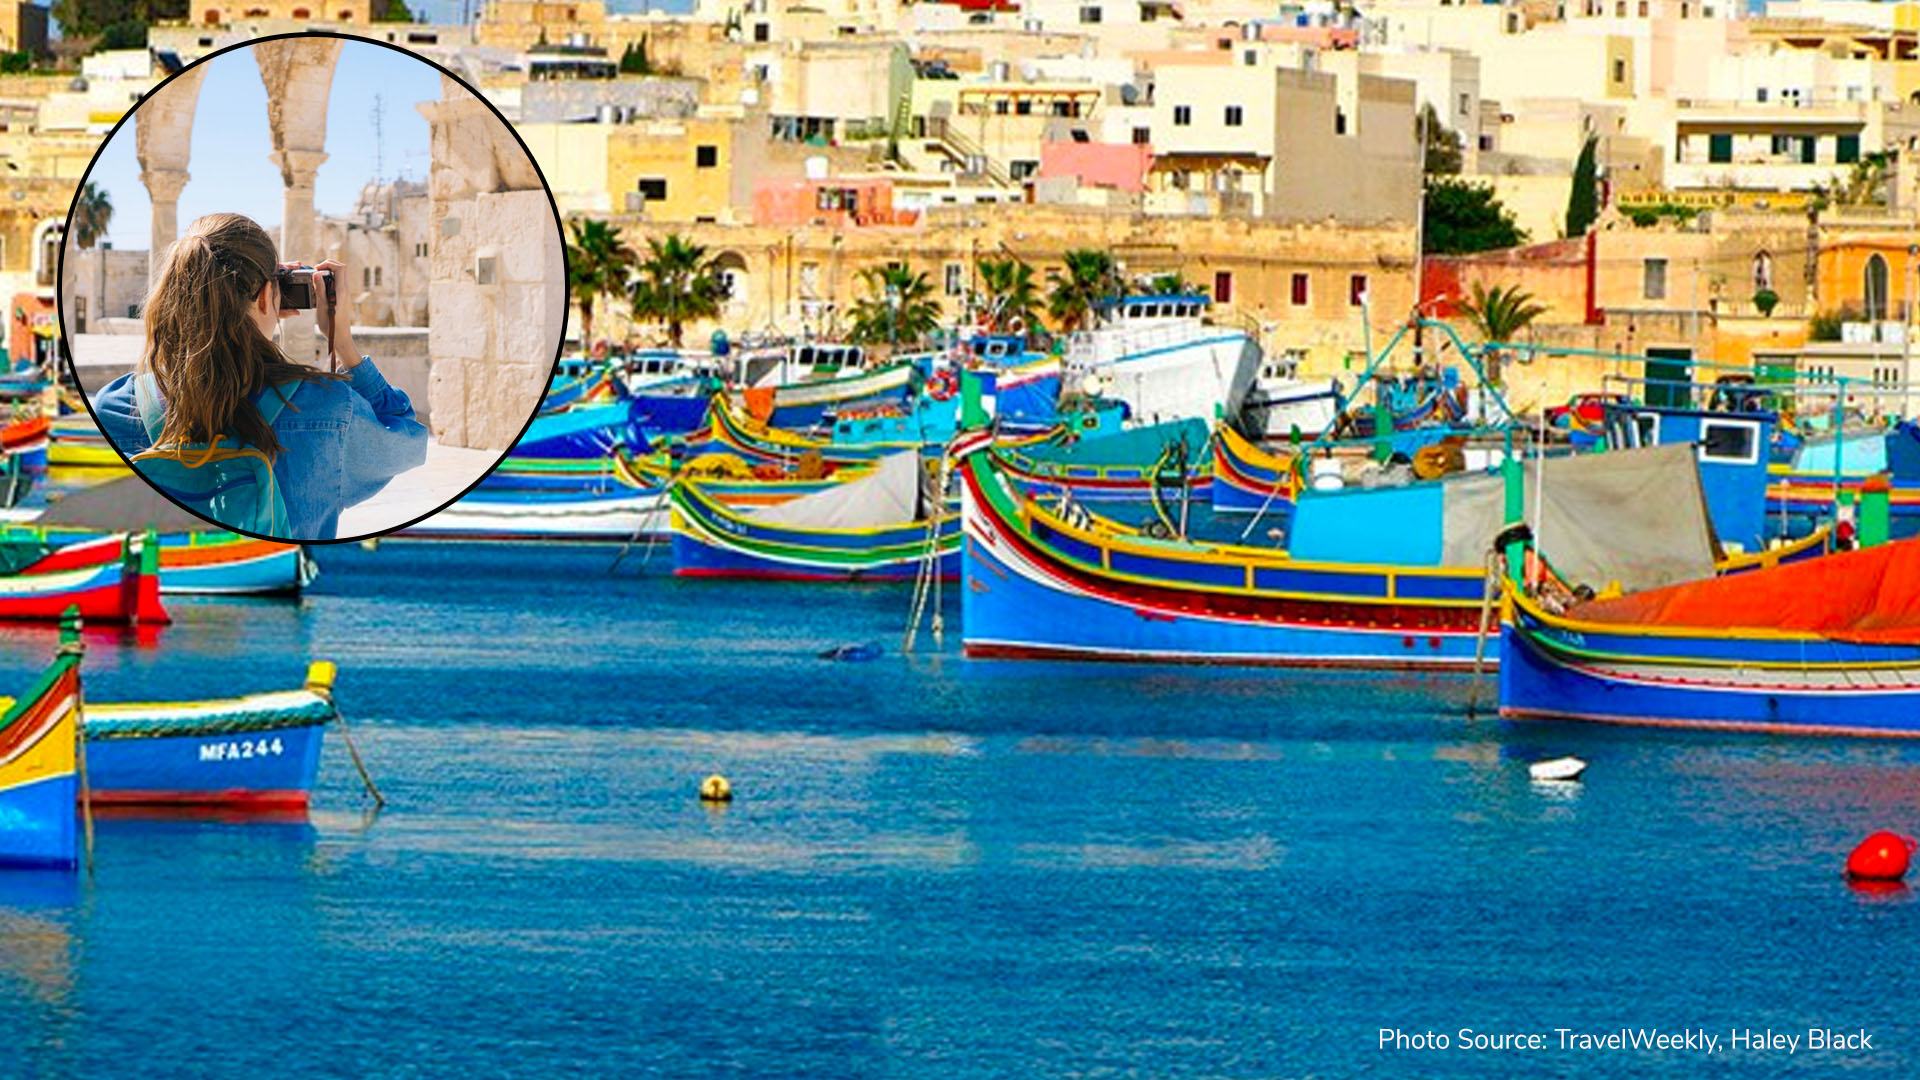 Around 9,000 tourists visited Malta last February